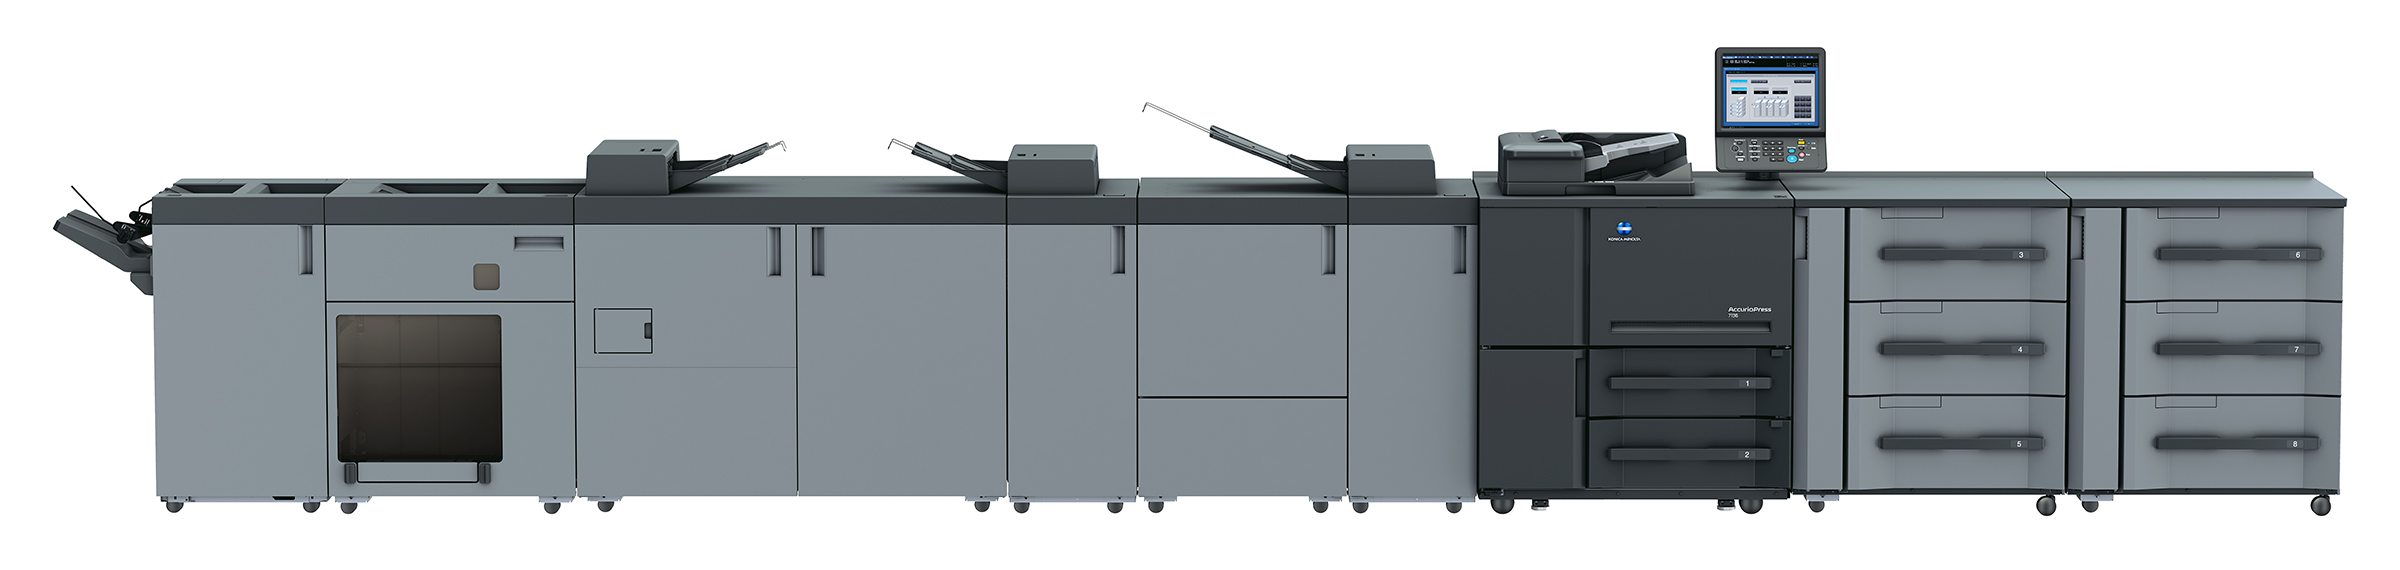 Konica Minolta Delivers Enhanced Digital Print Capabilities with New AccurioPress 7136 Series